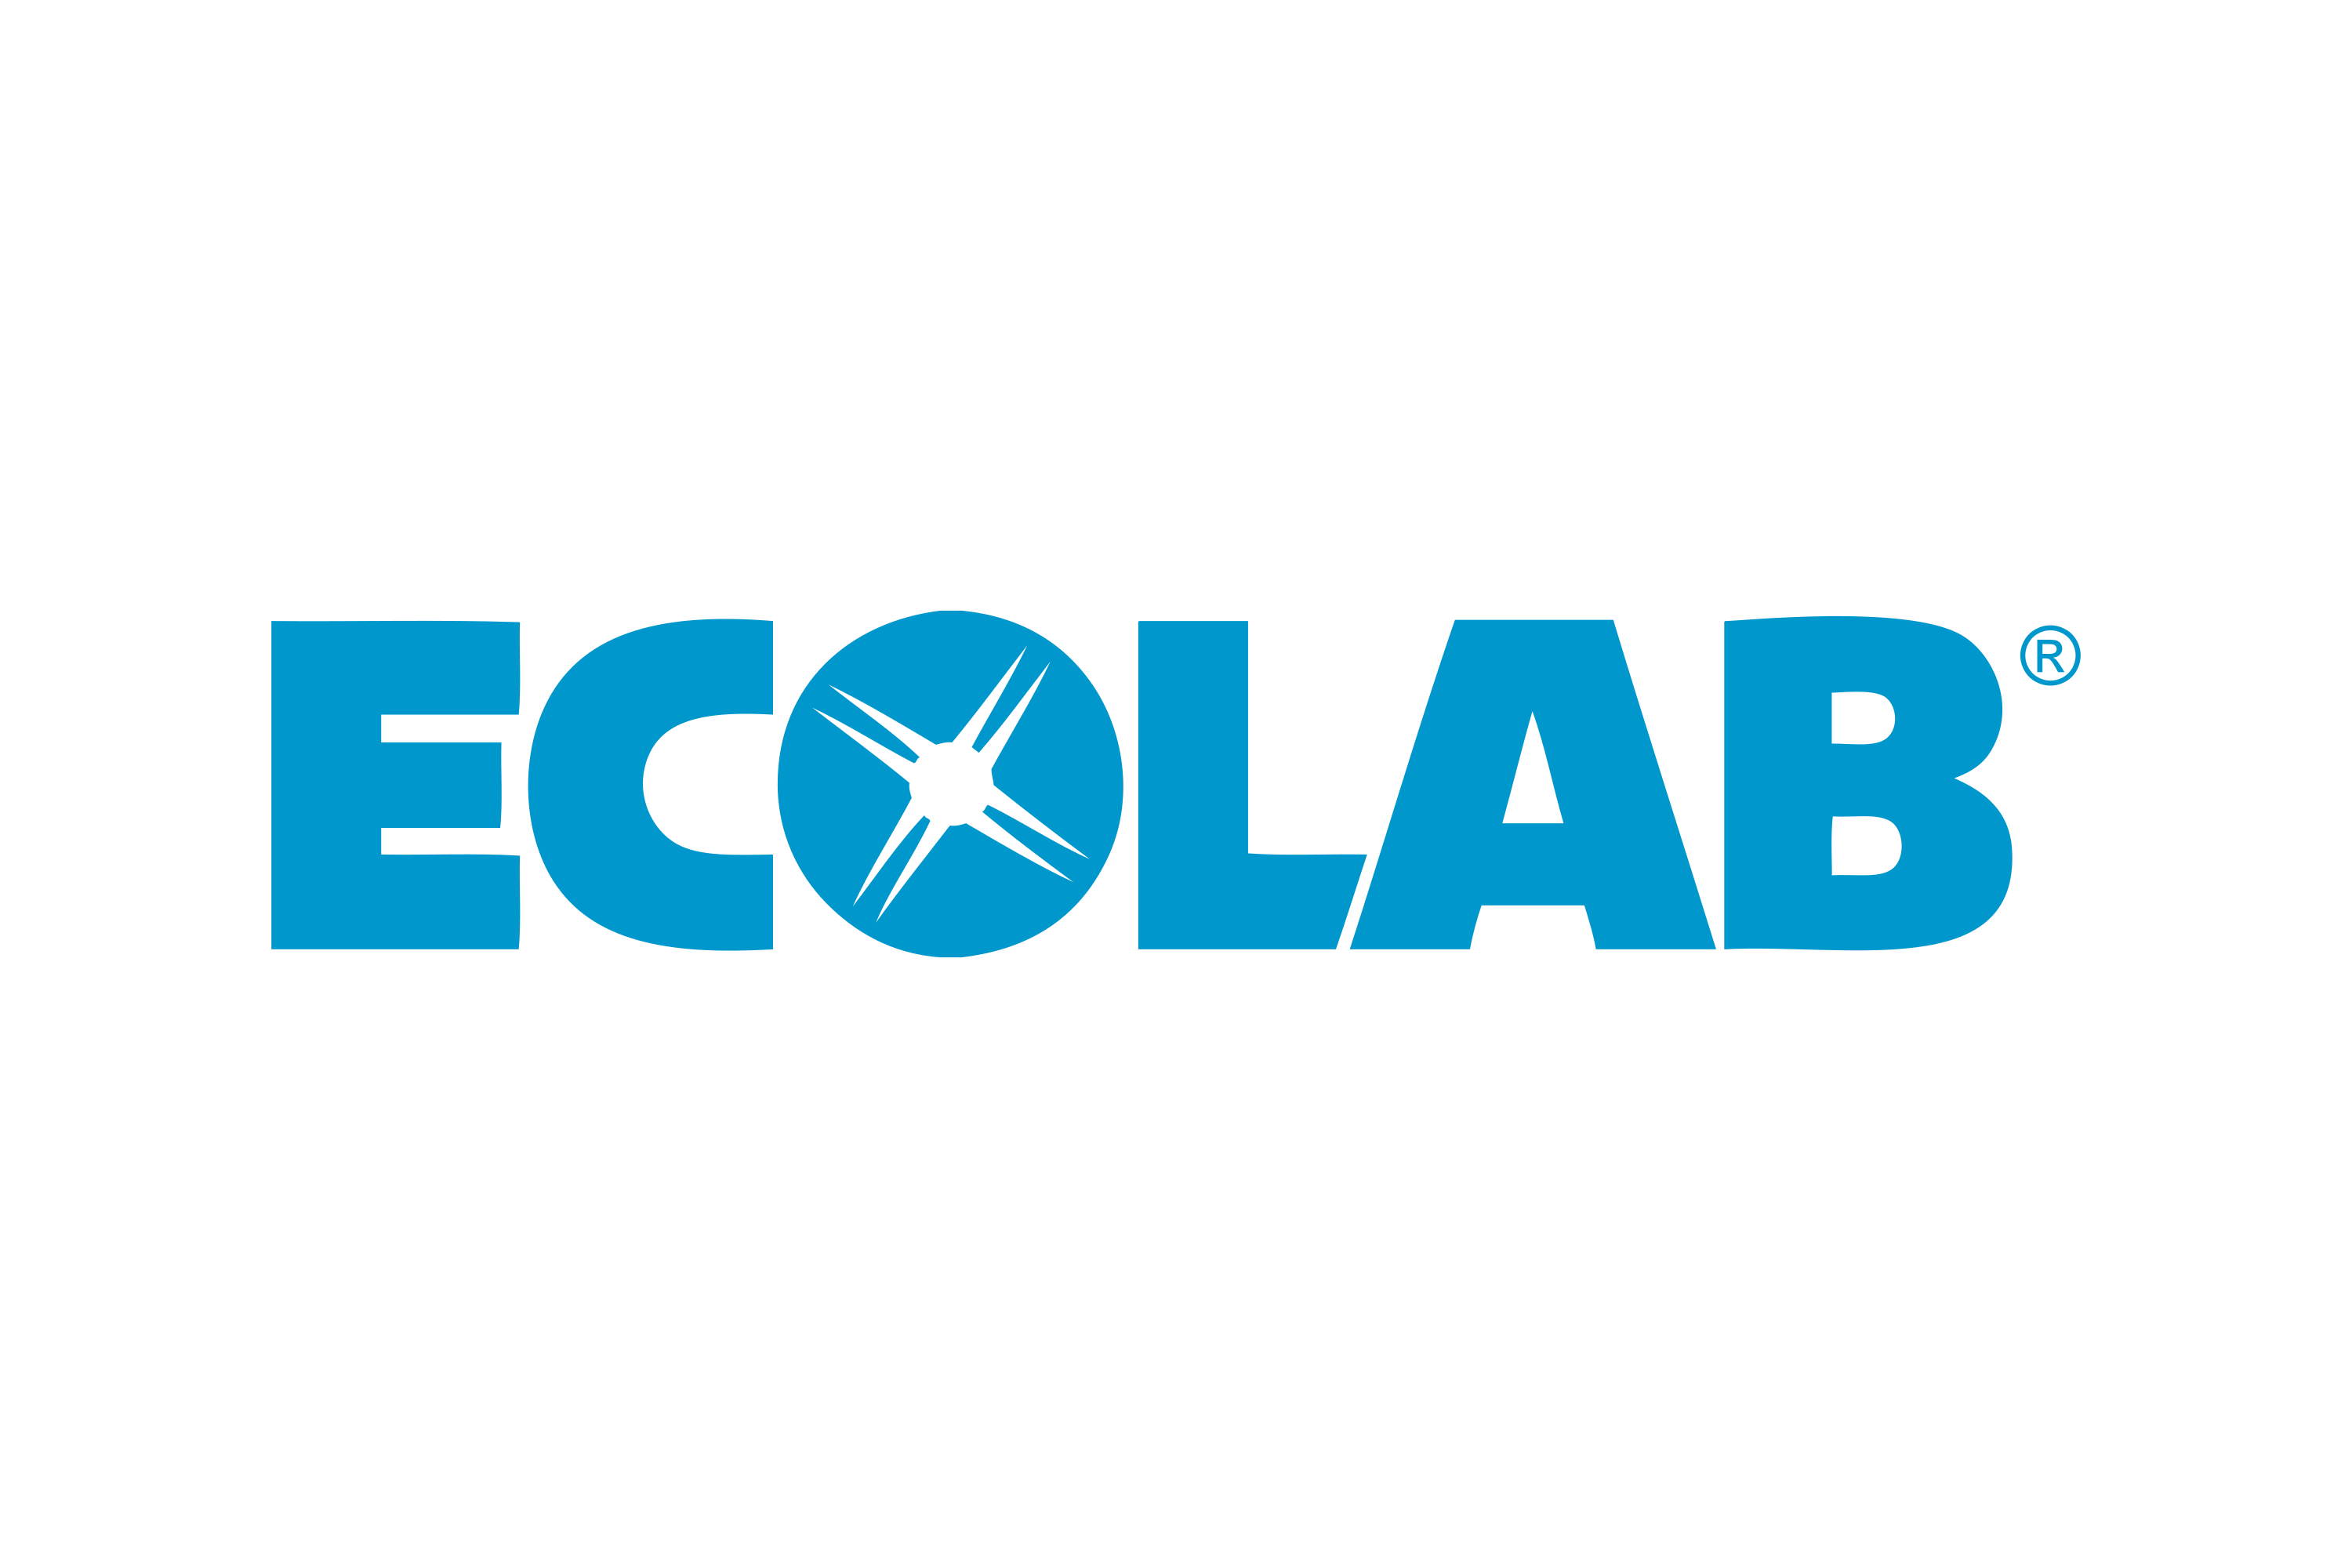 Ecolab-Logo